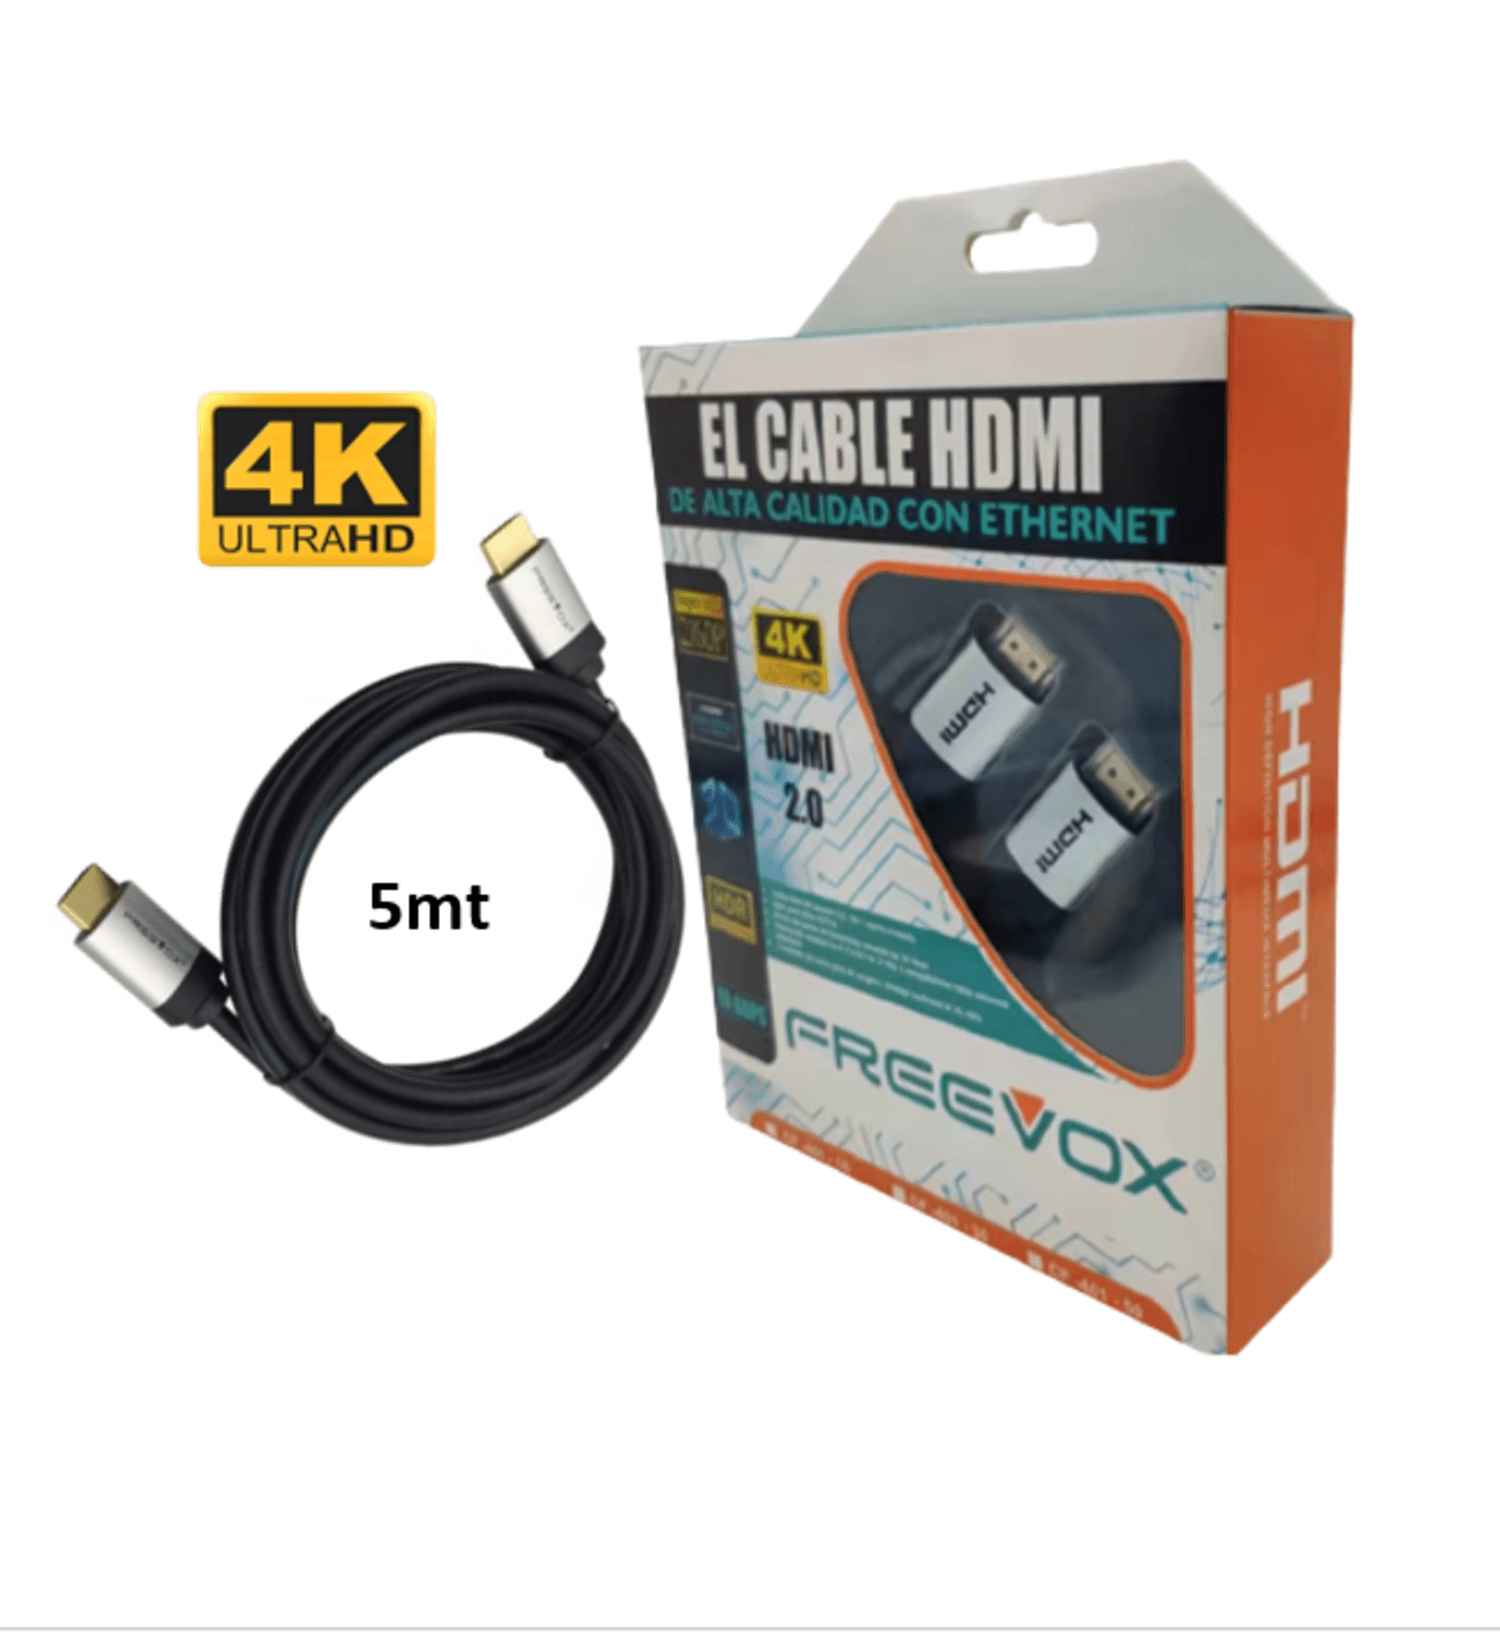 CABLE HDMI FREEVOX 4K V2.0 – 5m con Ethernet